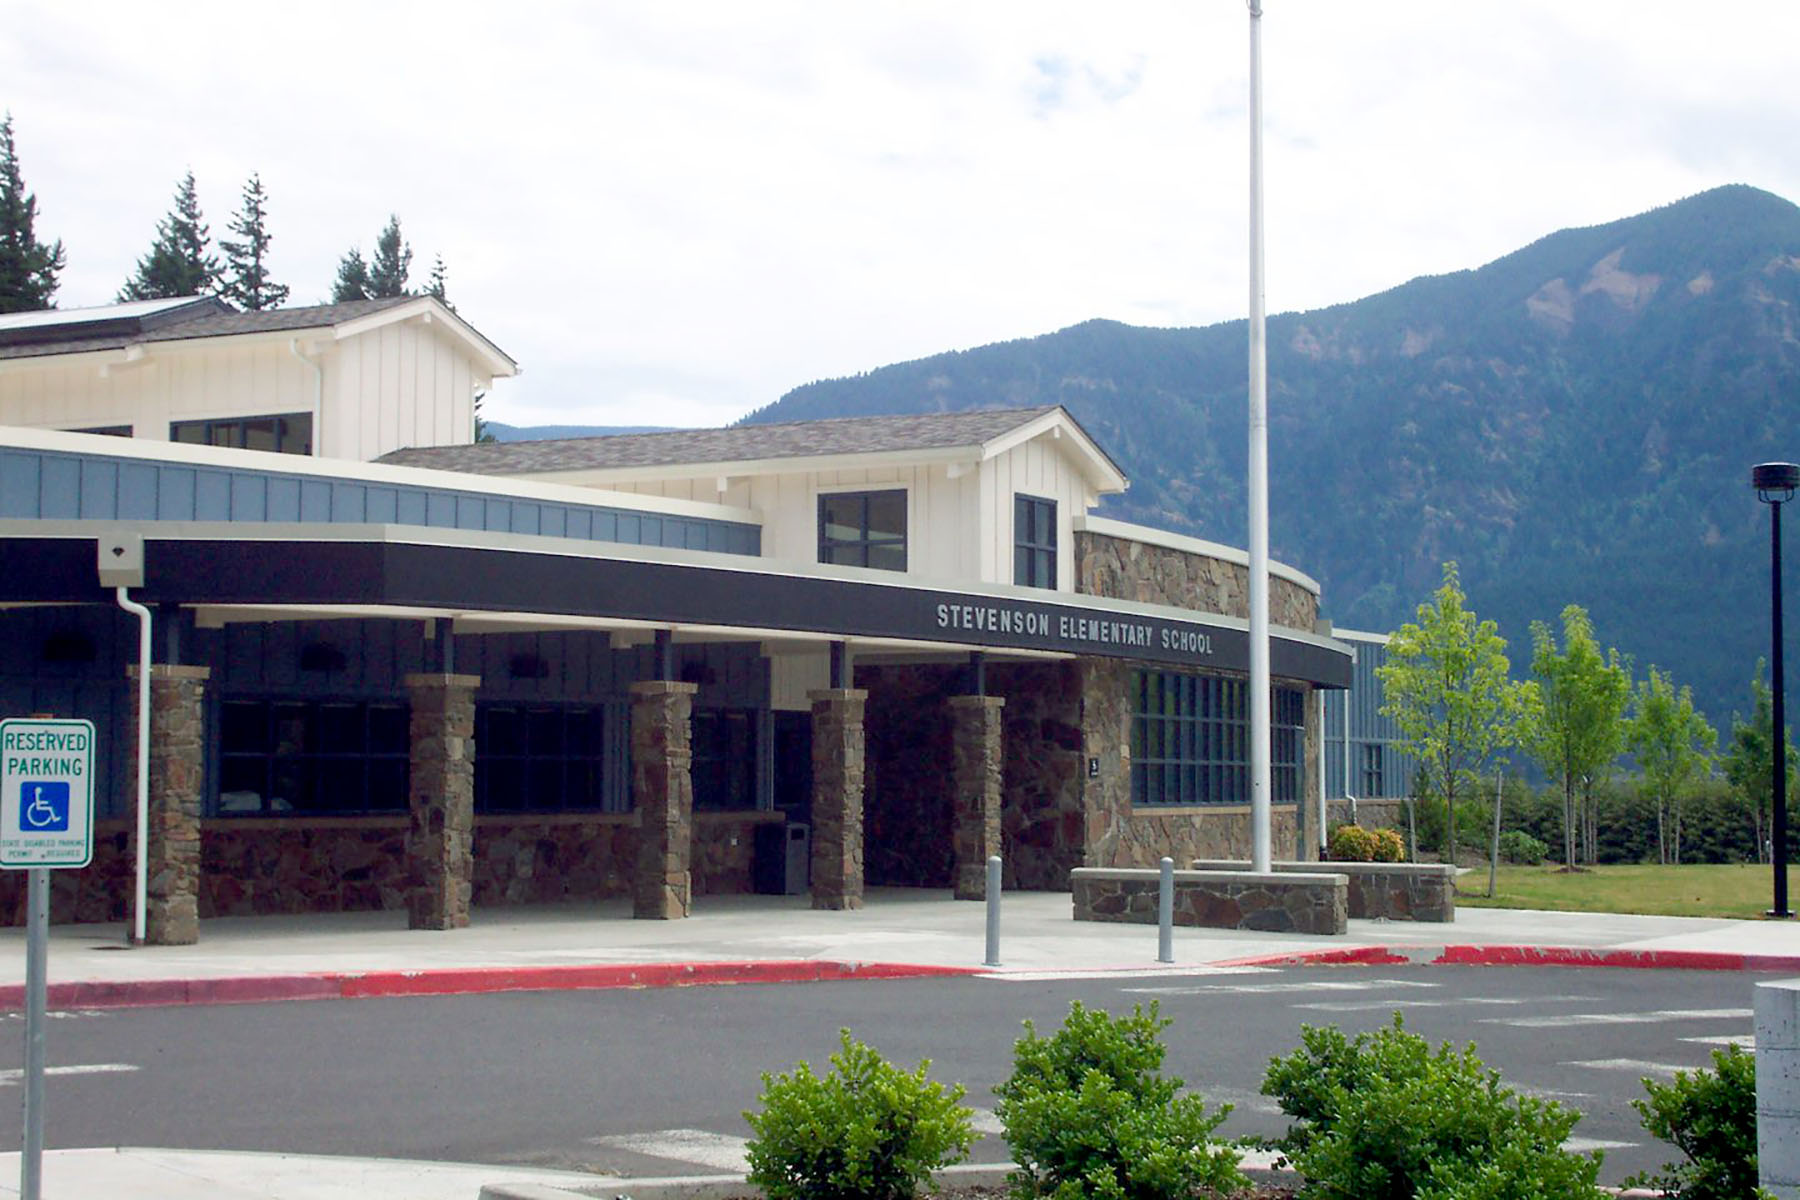 Stevenson Elementary School – Exterior Main Entrance